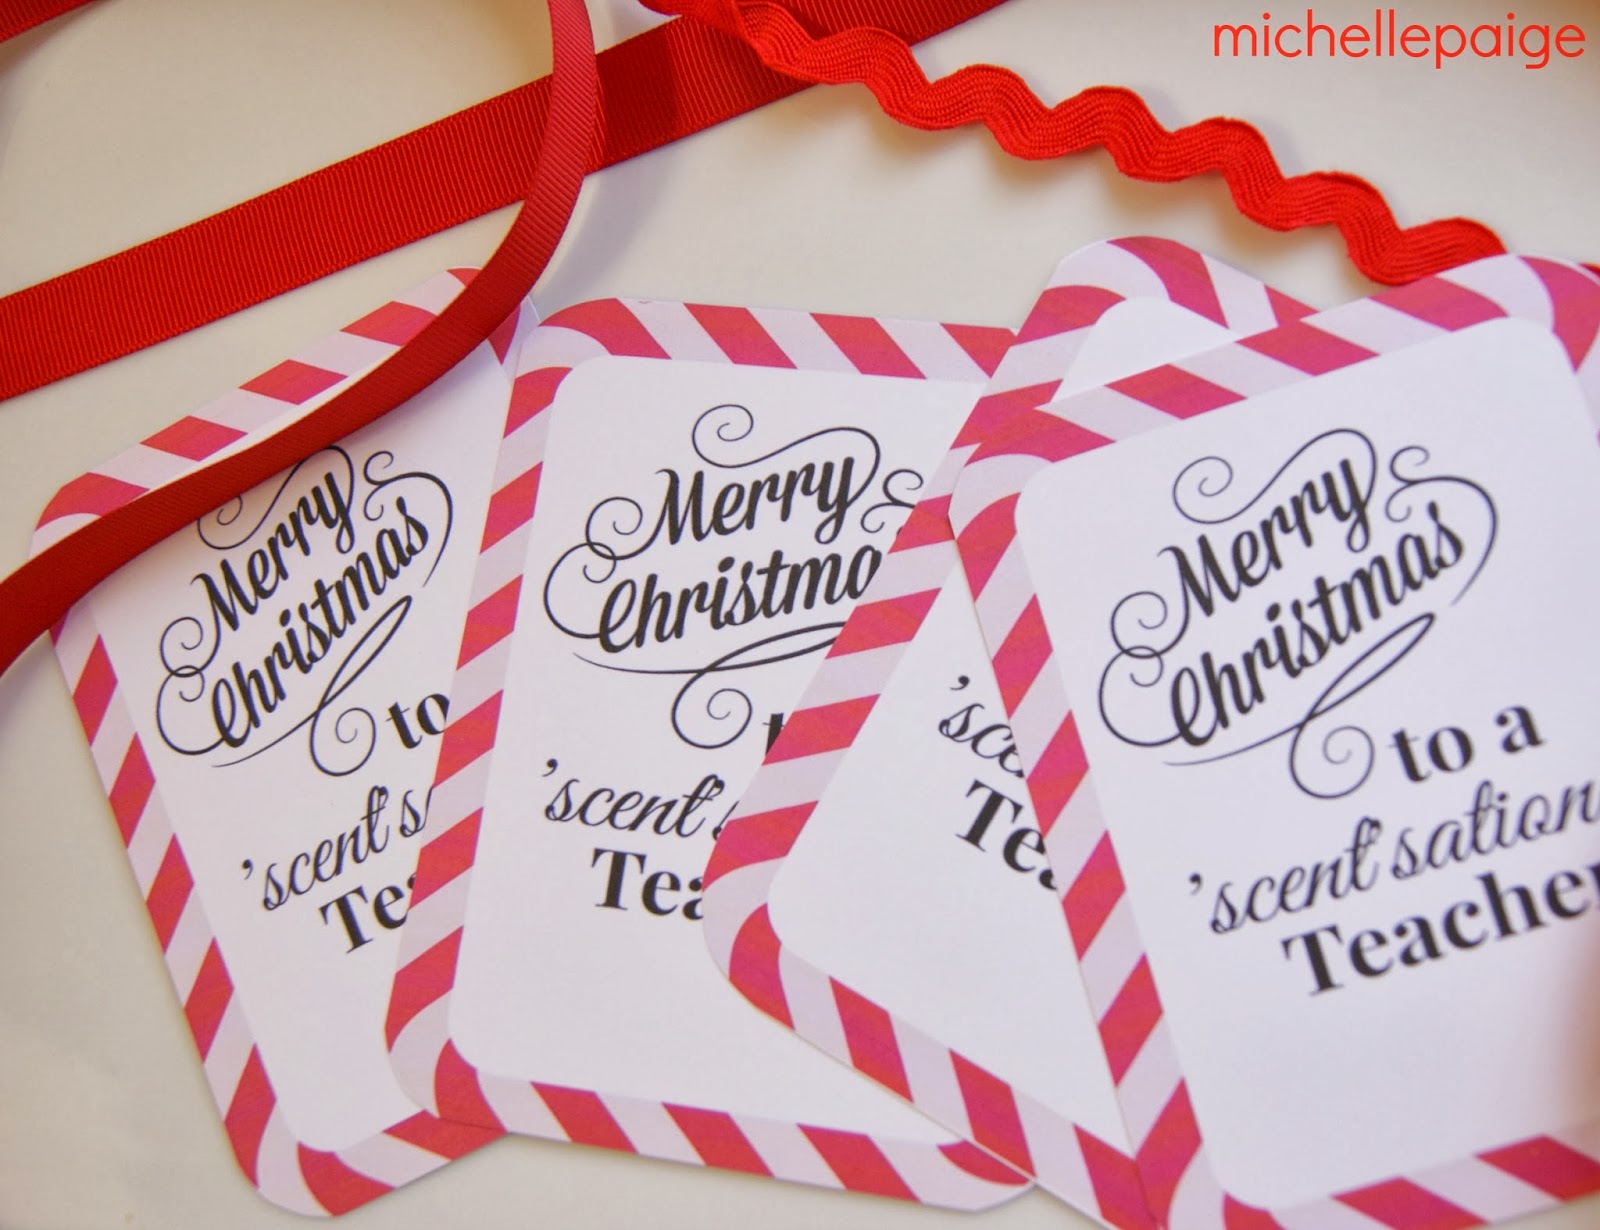 michelle-paige-blogs-quick-teacher-soap-gift-for-christmas